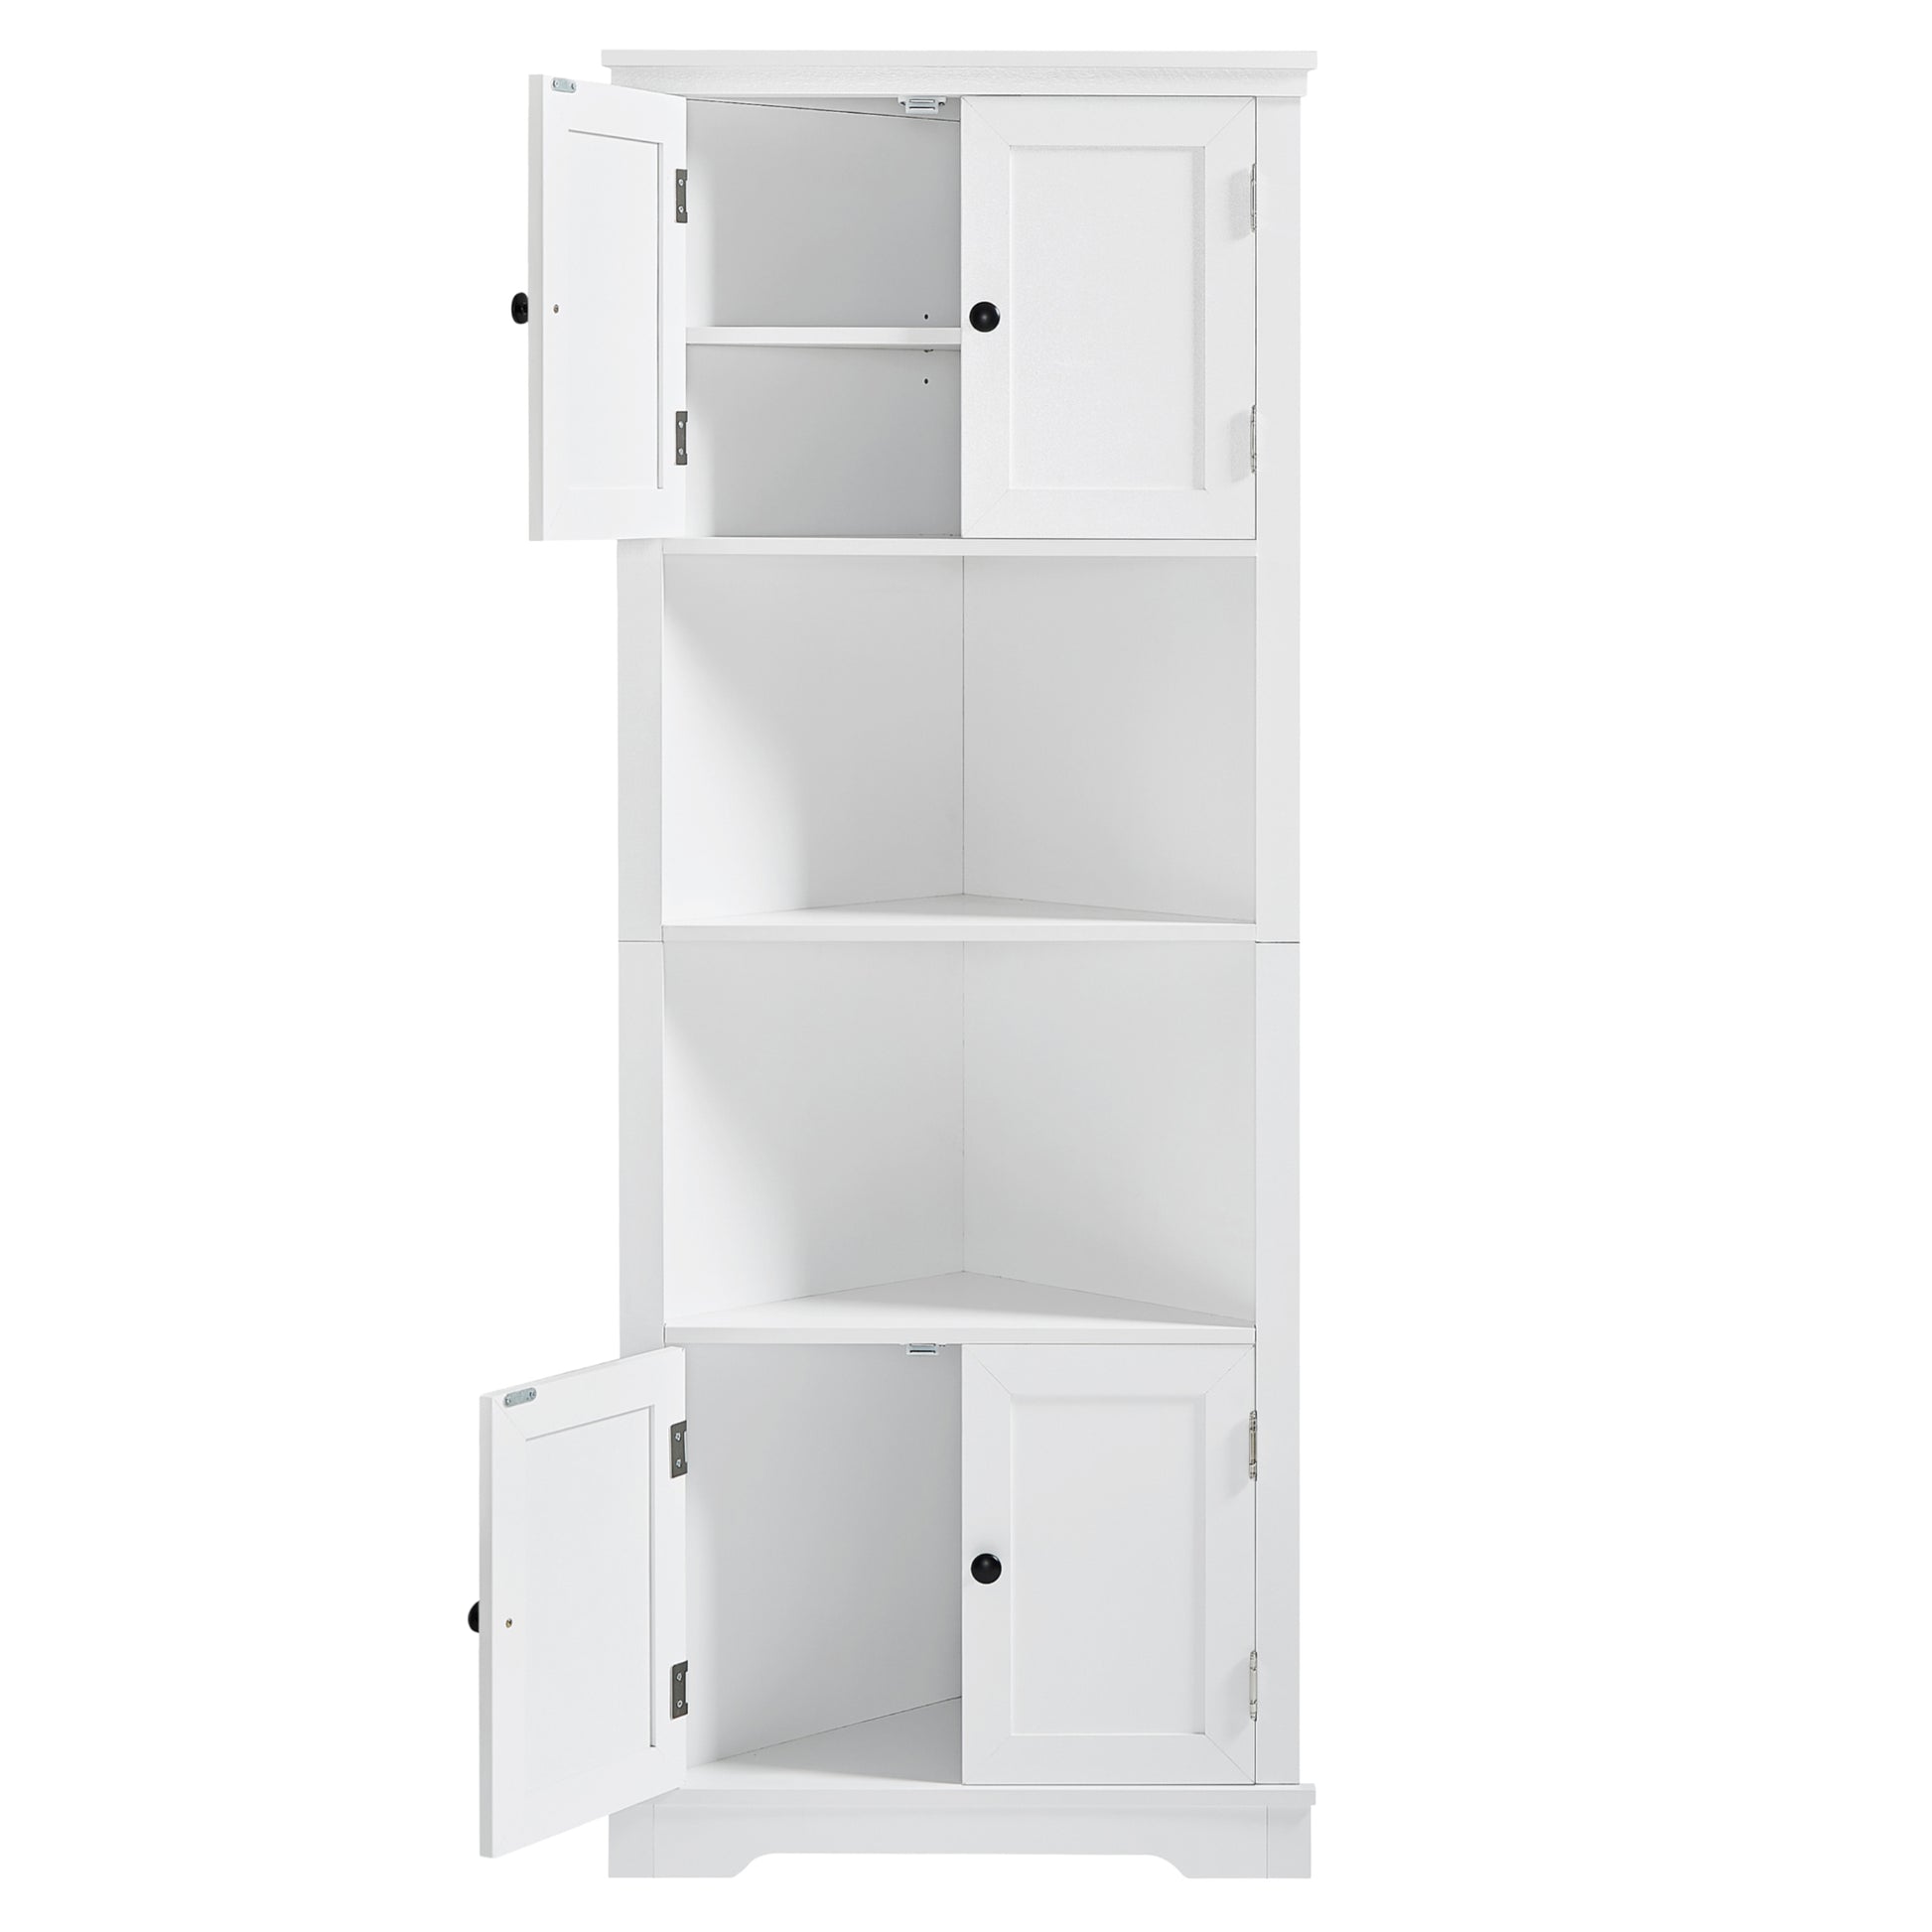 Tall Bathroom Storage Cabinet, Corner Cabinet with white-mdf